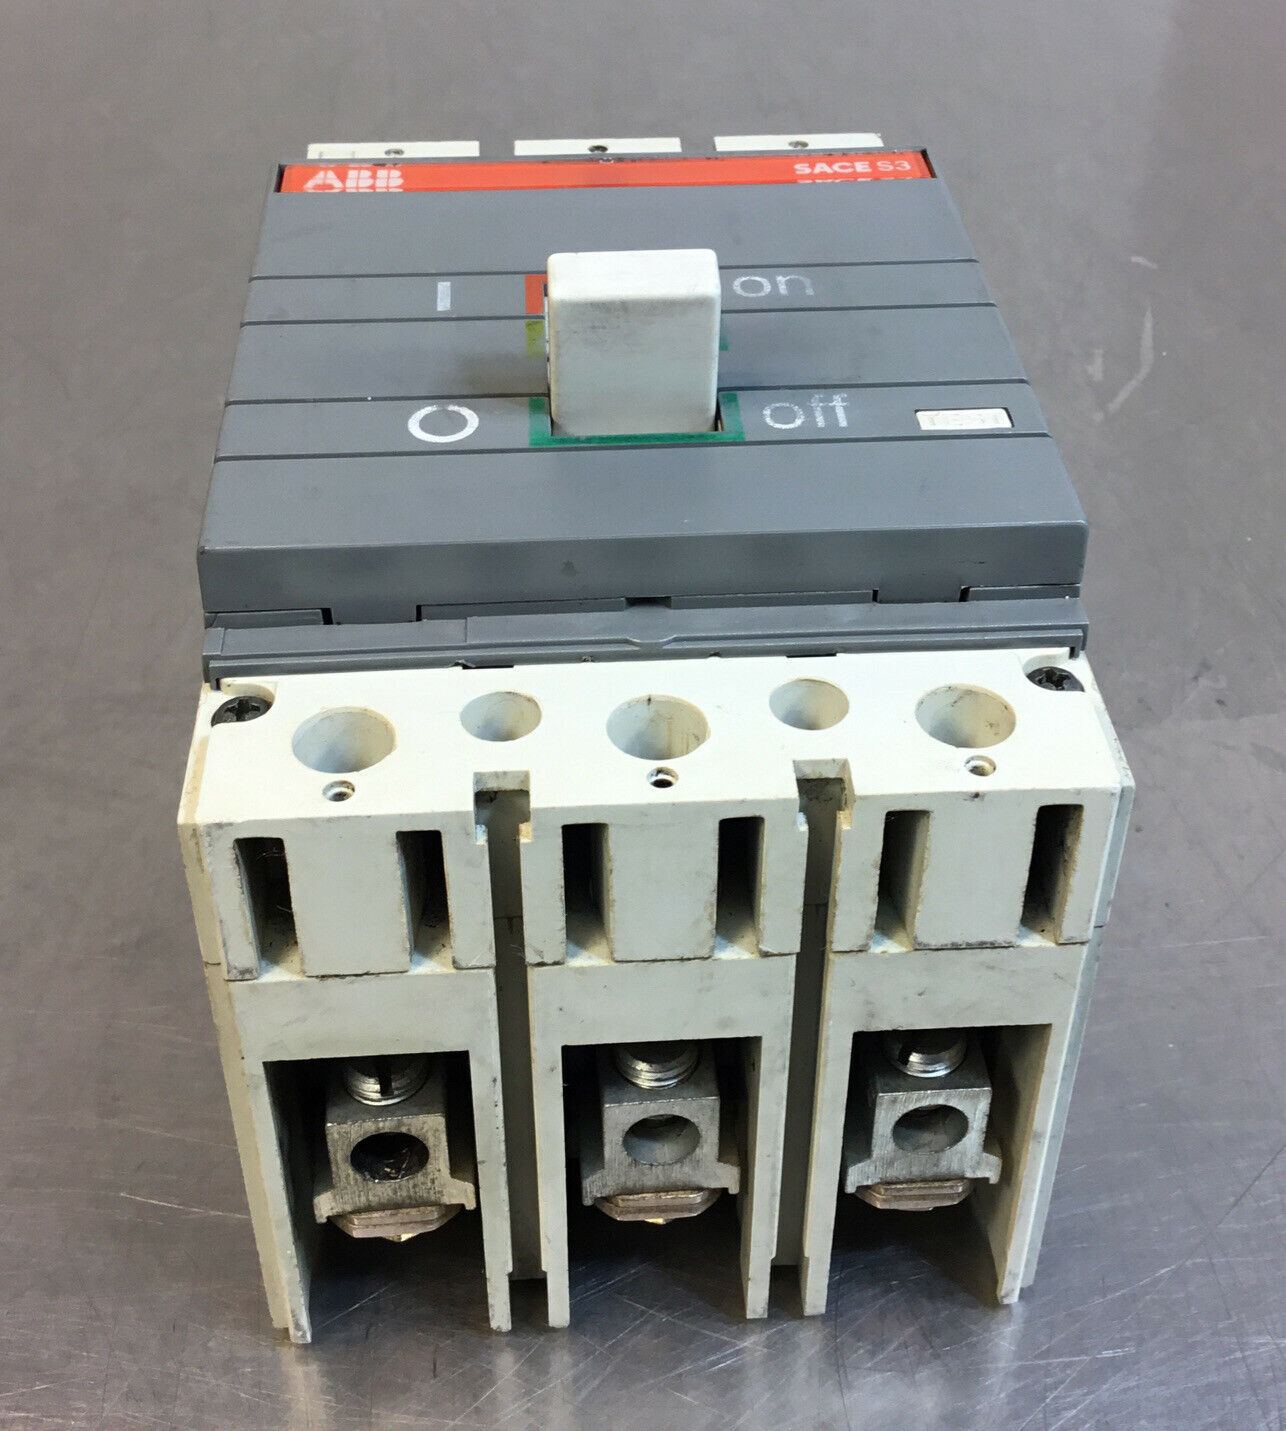 ABB S3N SACES3 Circuit Breaker  50A 600V 3P     4E-4